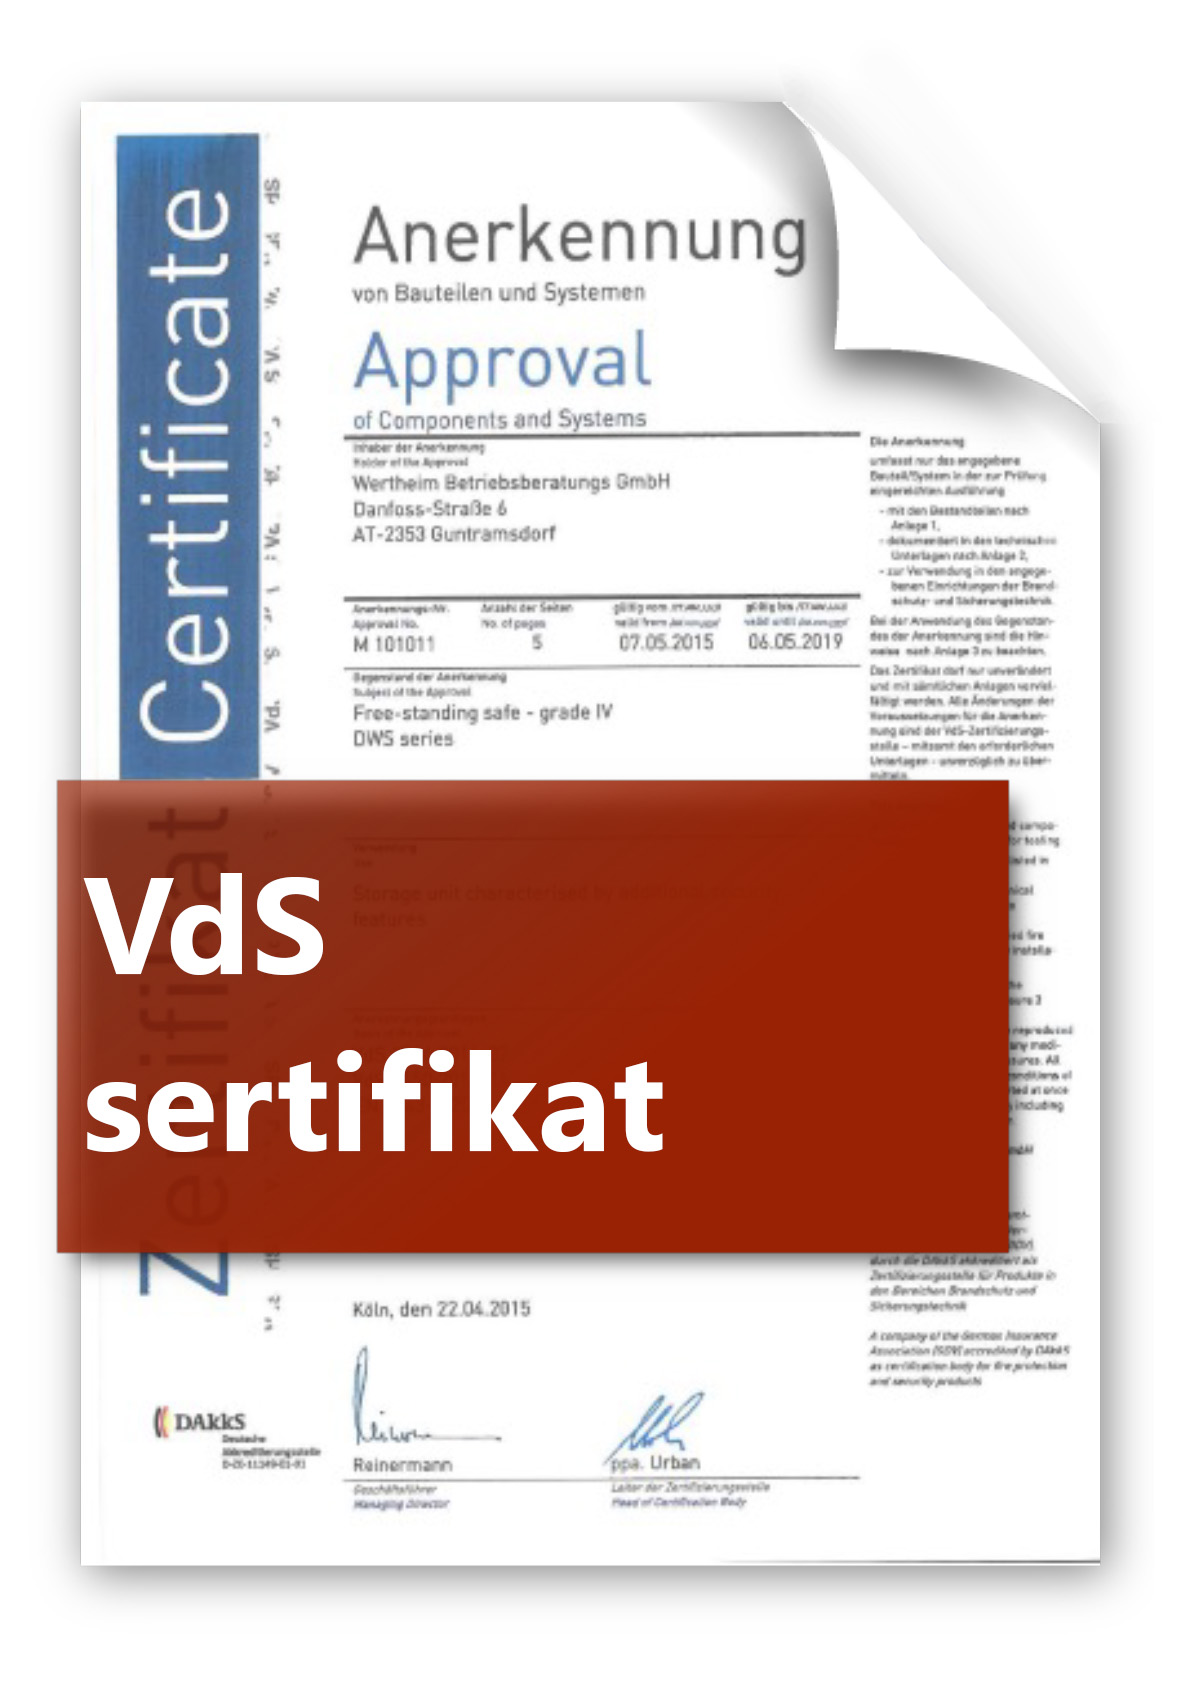 Zertifikat VSO